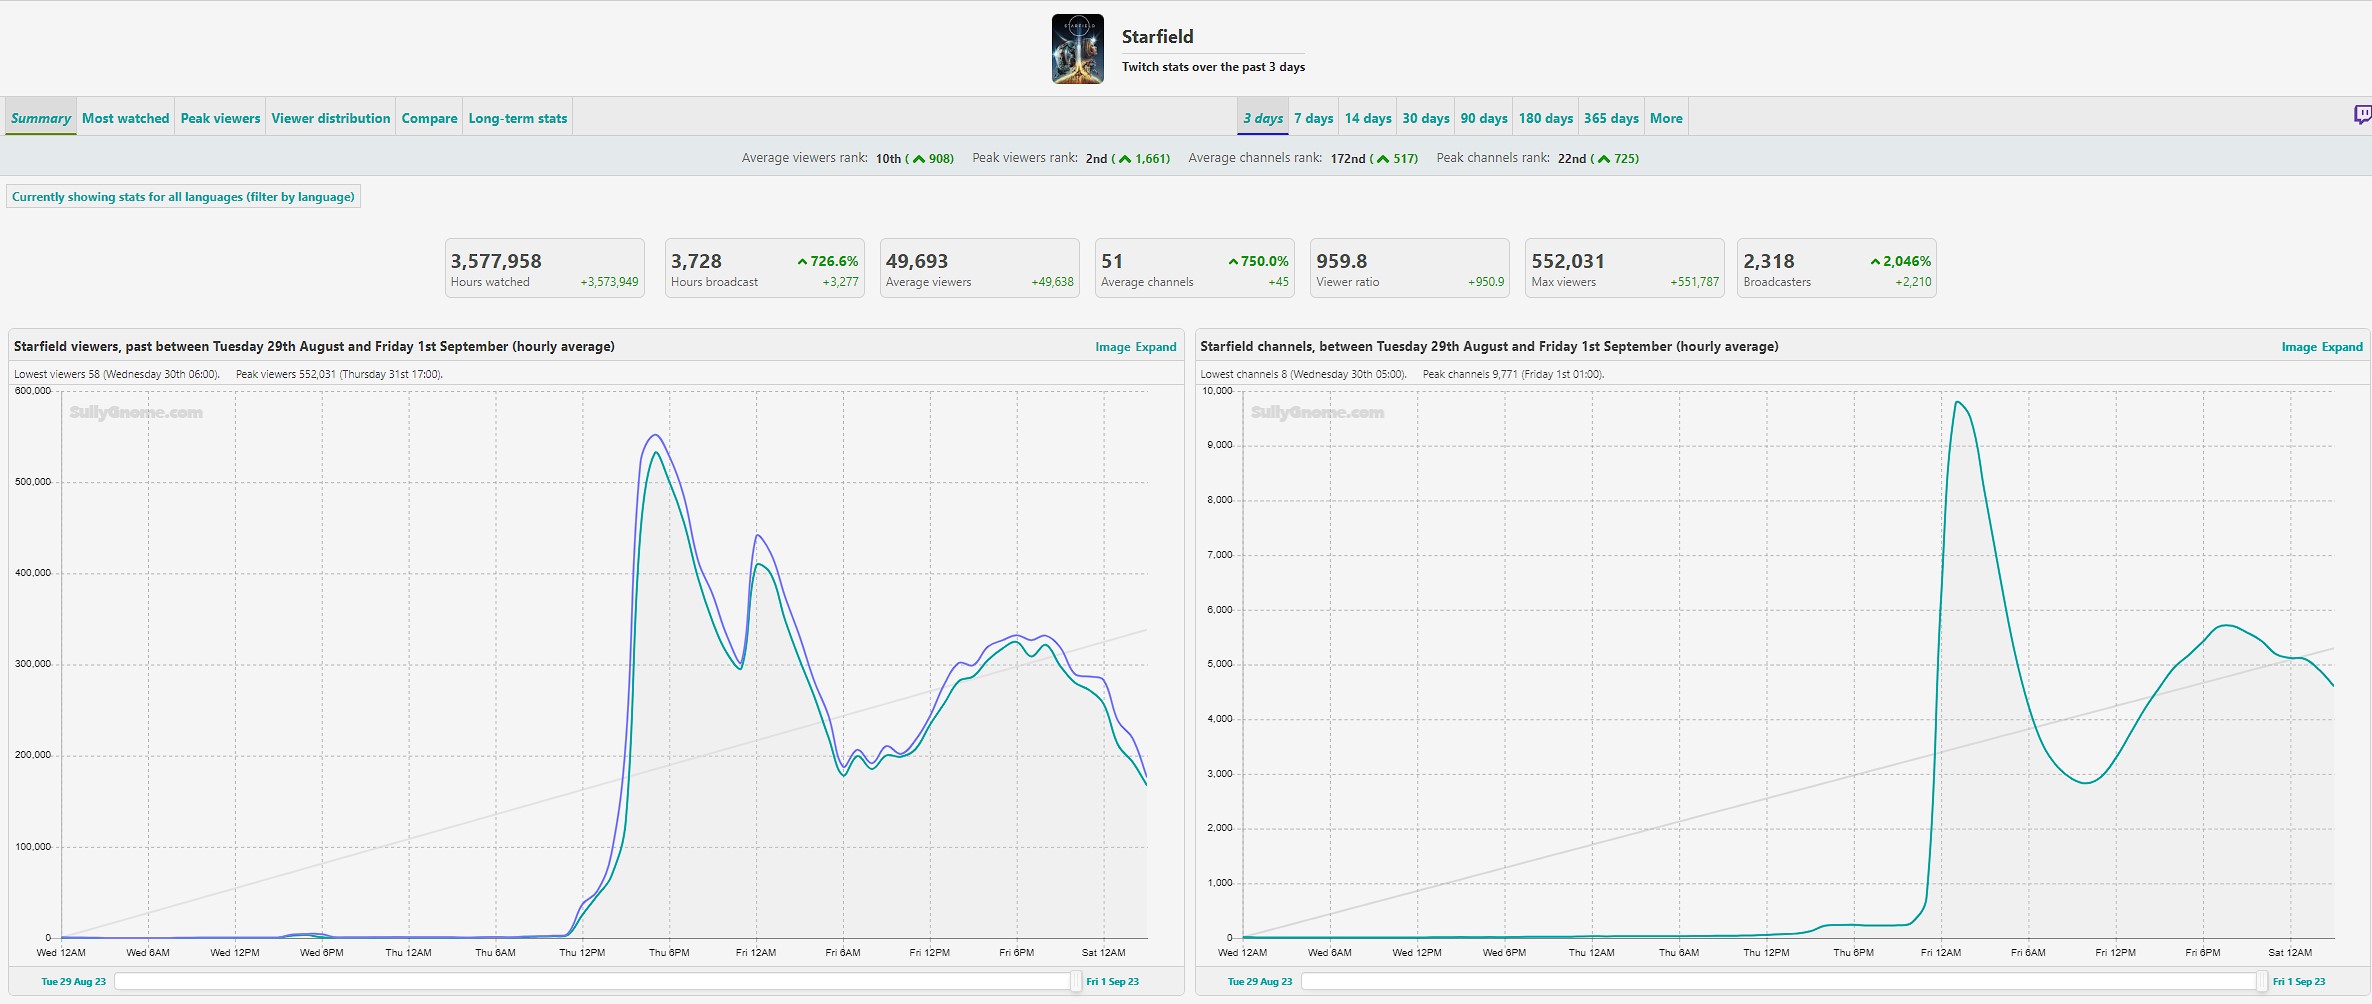 Starfield Tops 550K Views On Twitch